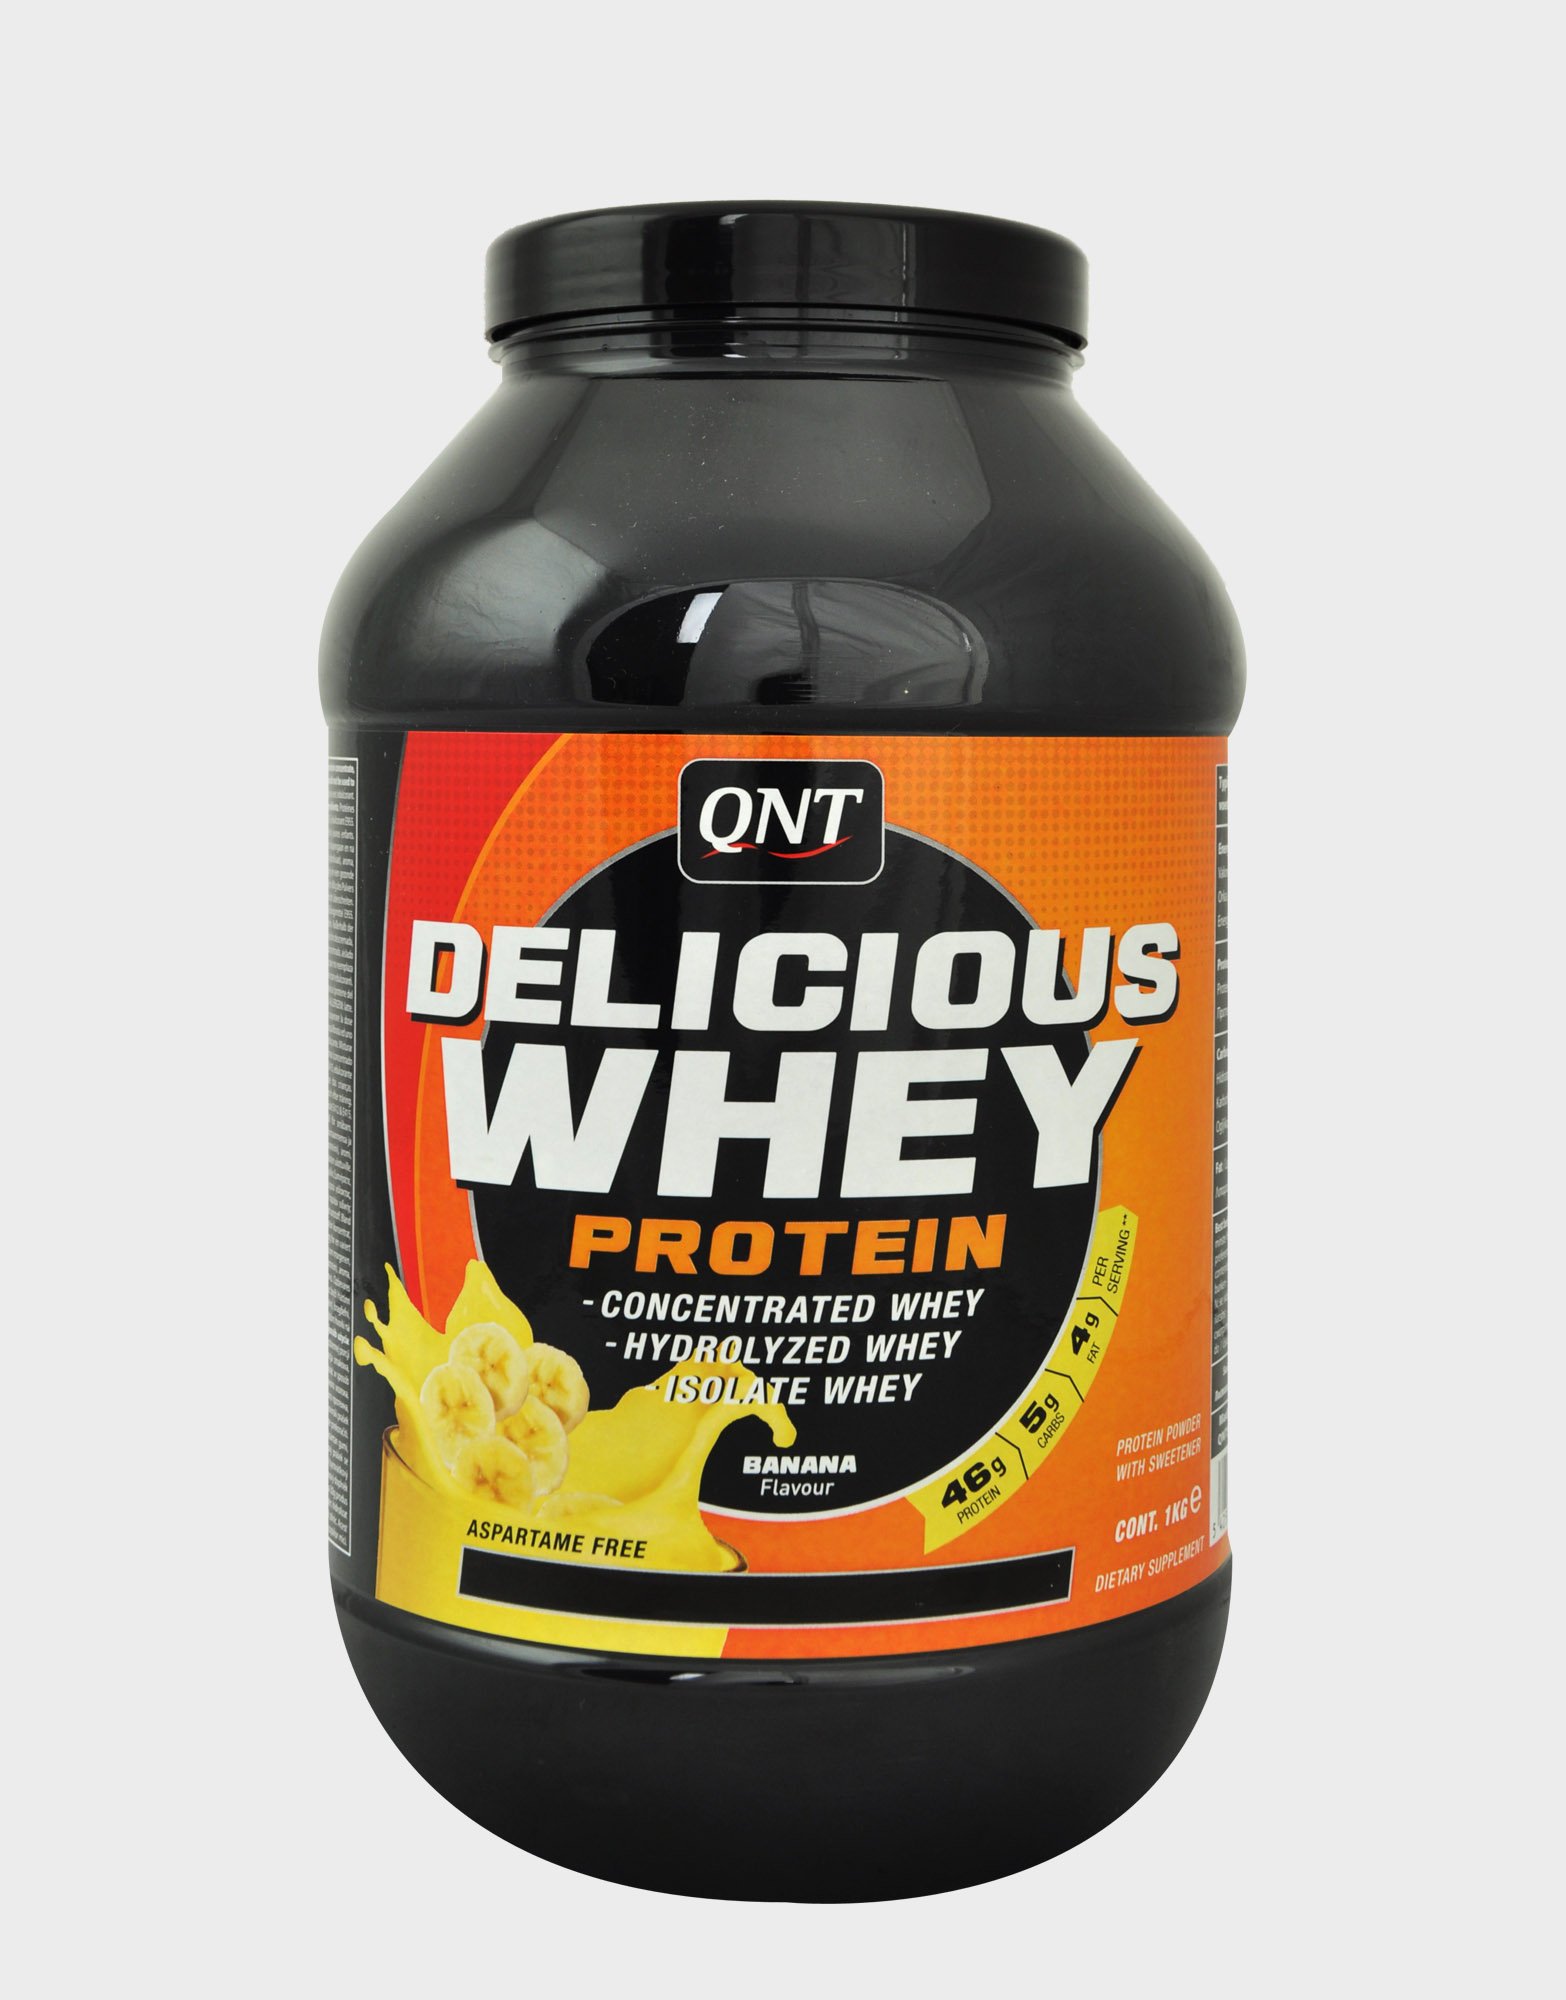 Delicious Whey Protein, 1000 g, QNT. Suero concentrado. Mass Gain recuperación Anti-catabolic properties 